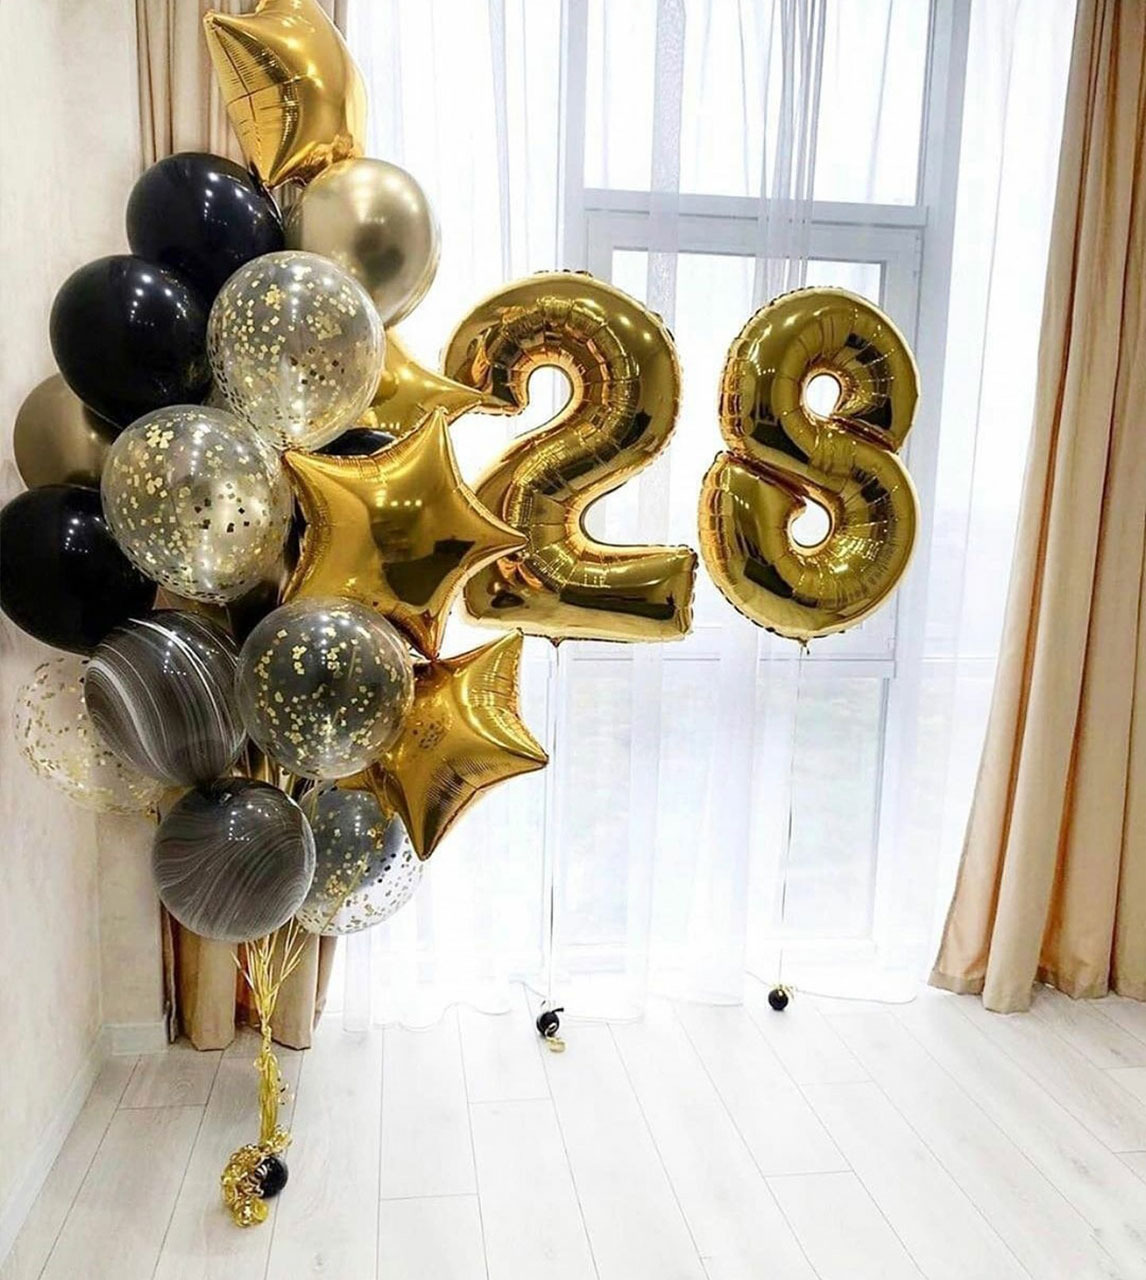 Фото с шарами цифрами на день рождения